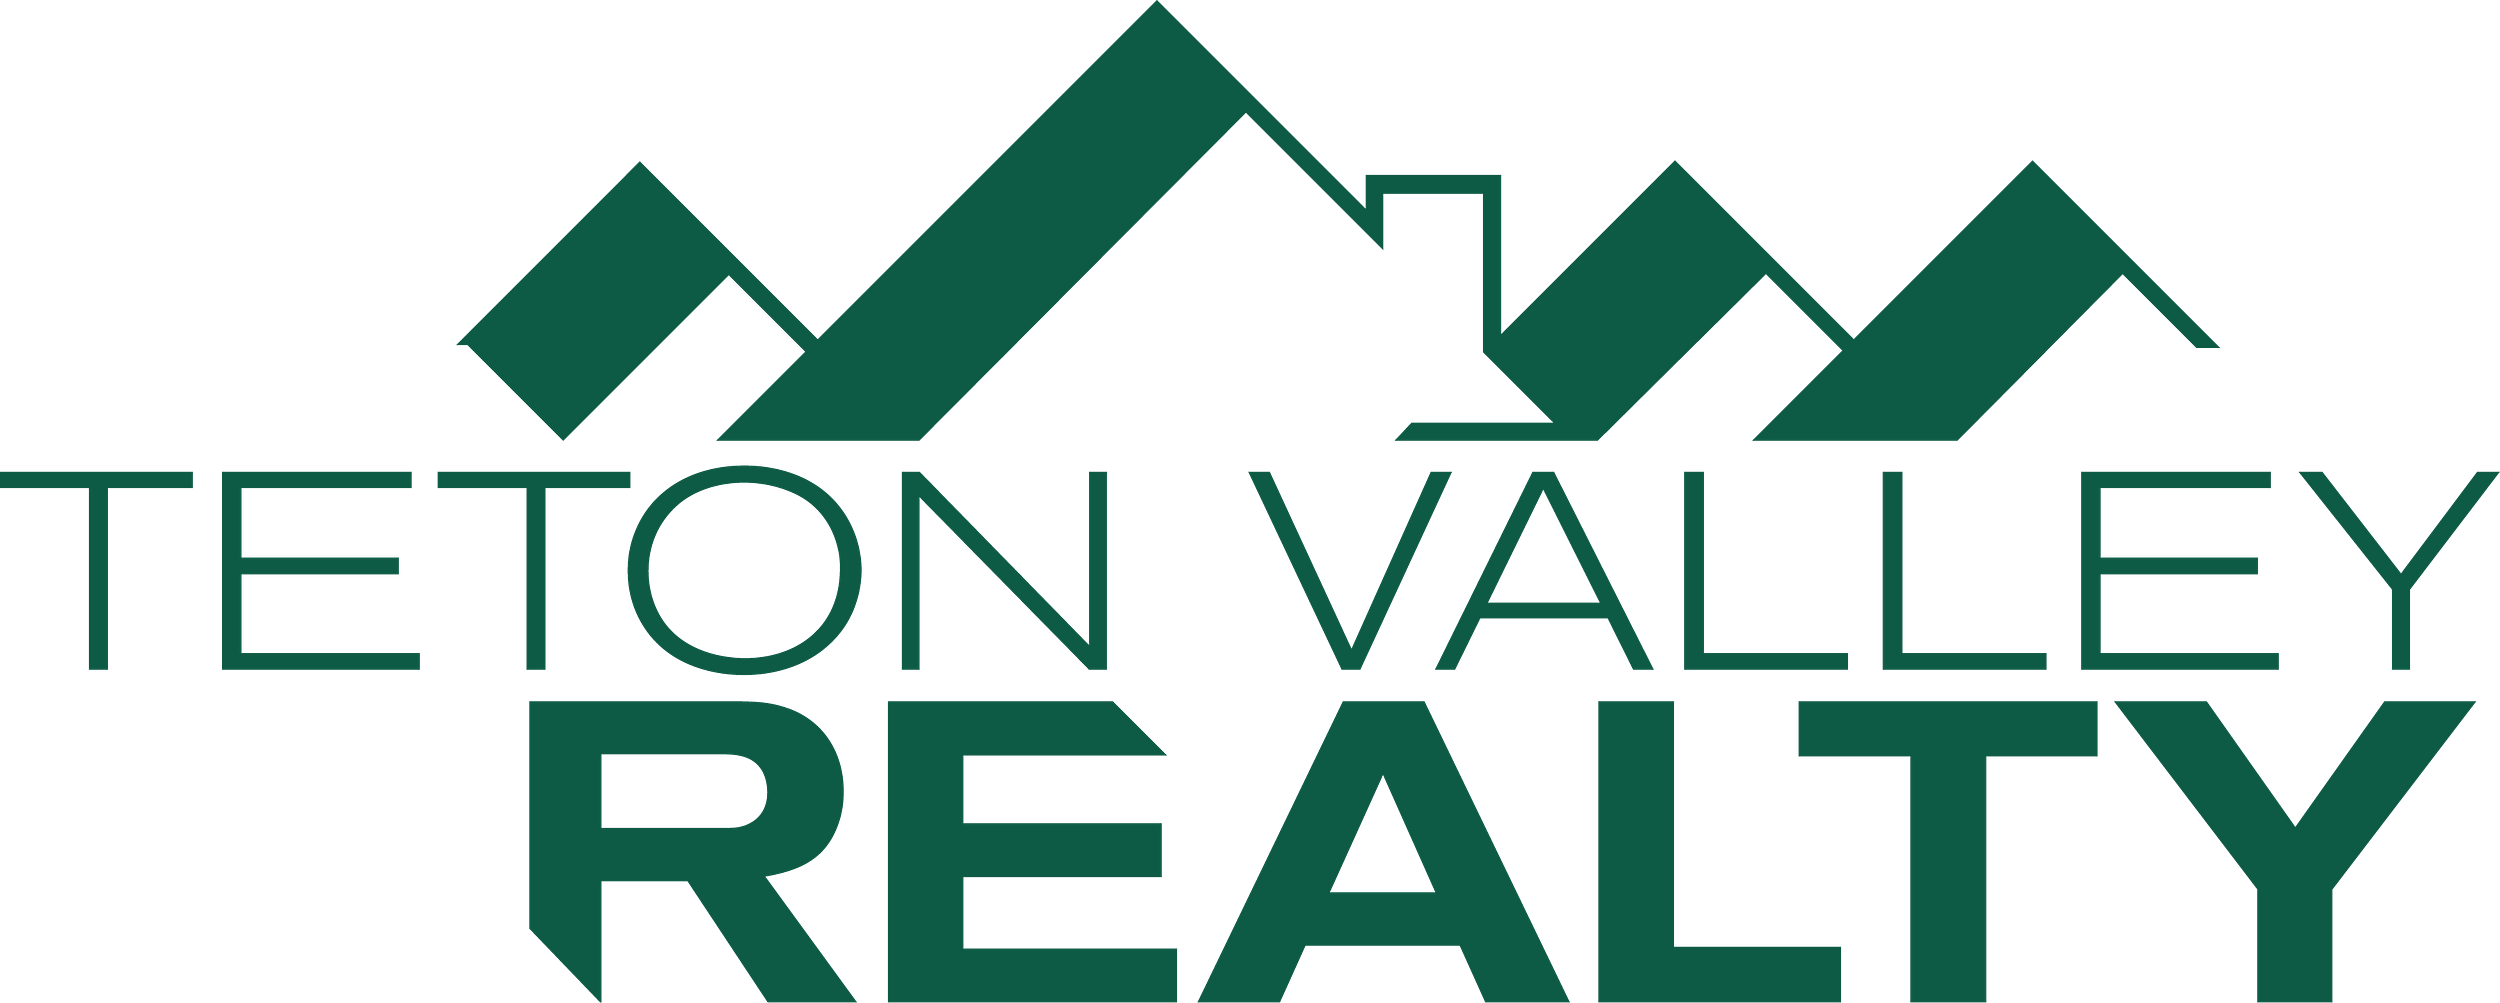 Teton Valley Realty